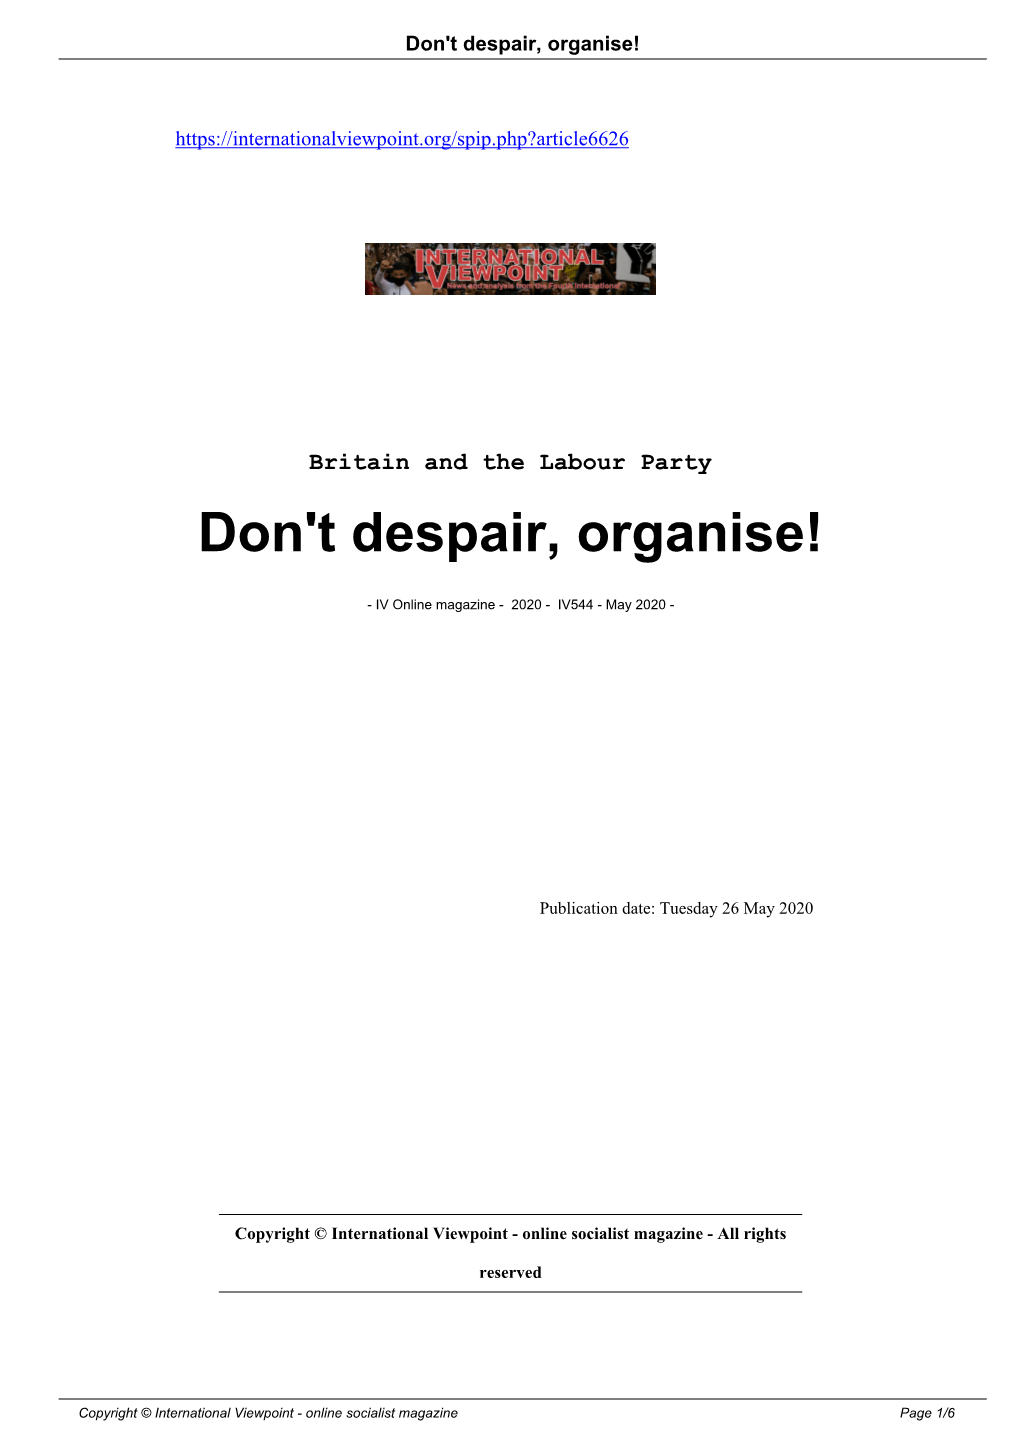 Don't Despair, Organise!